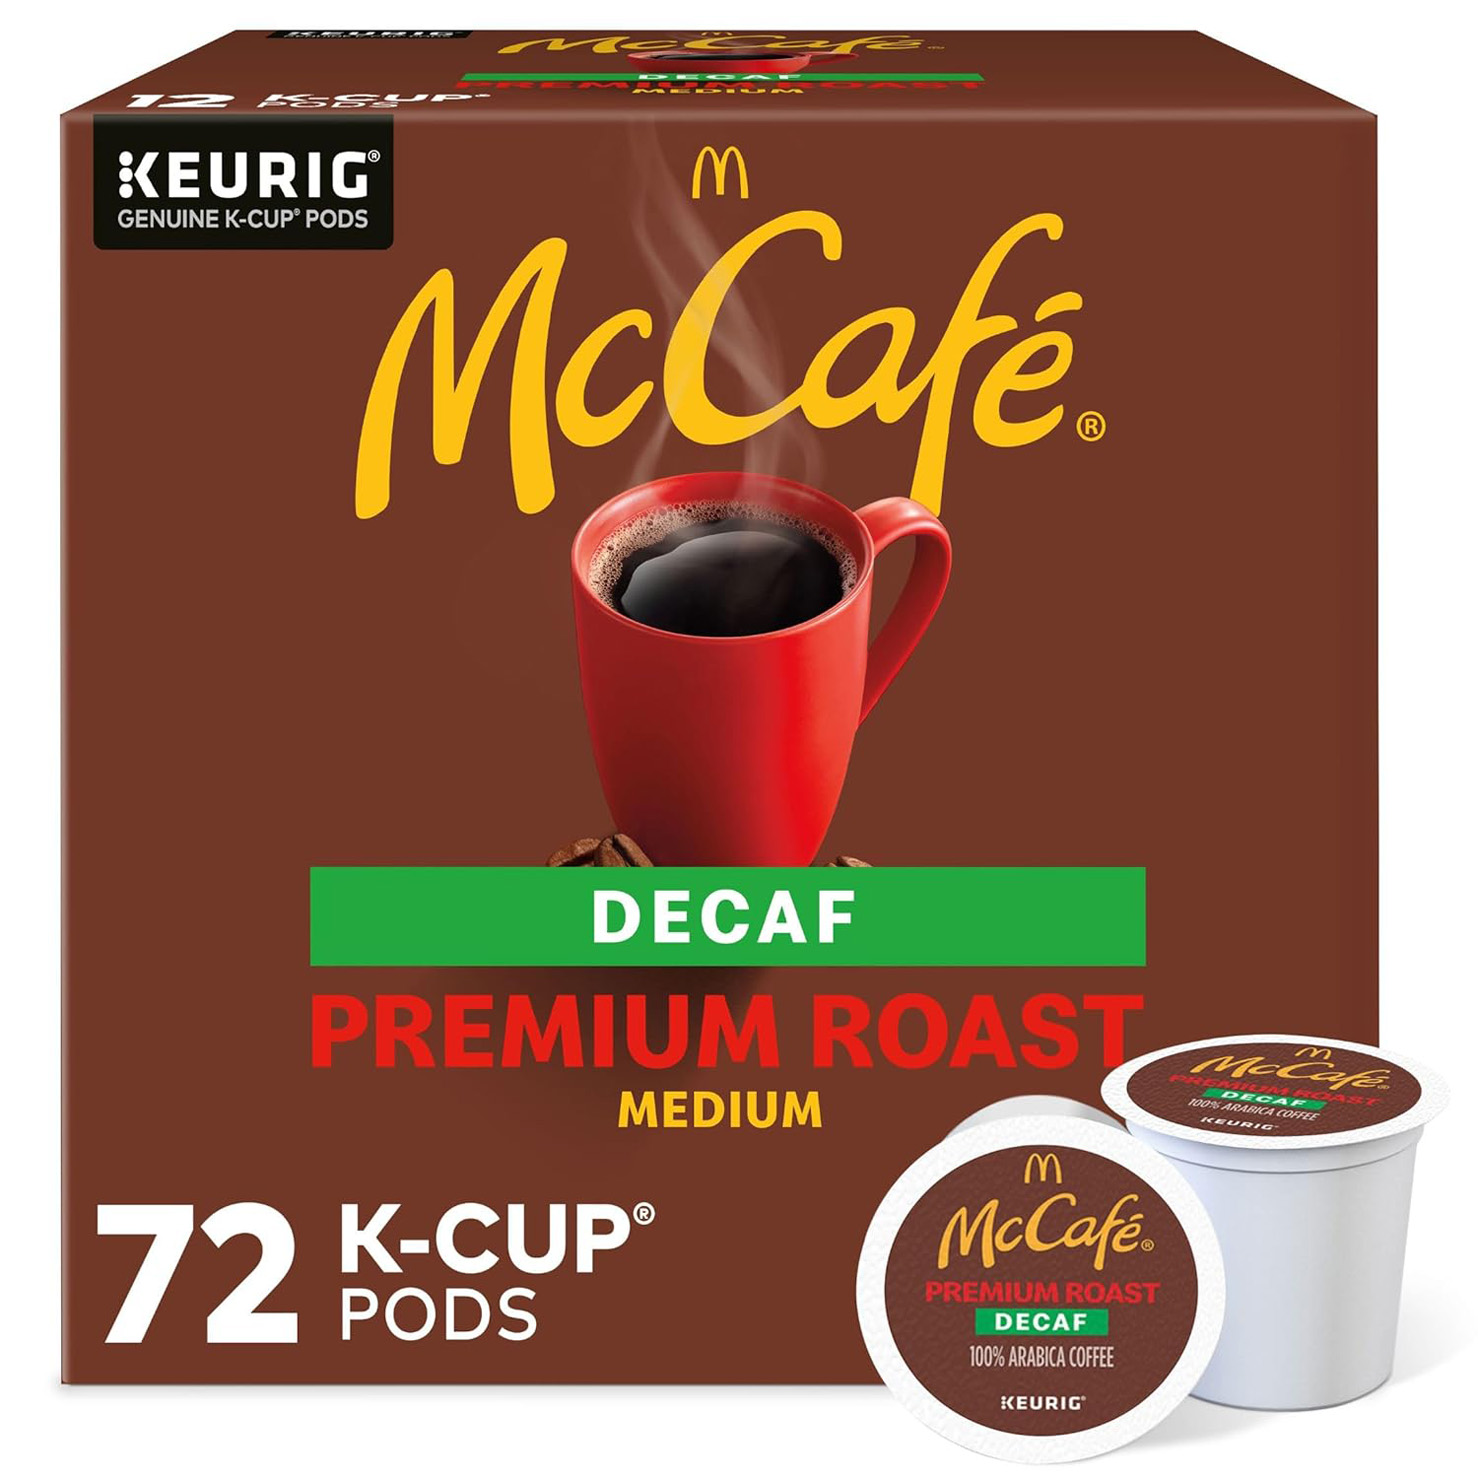 McCafé Decaf Premium Medium Roast K-Cup Coffee Pods